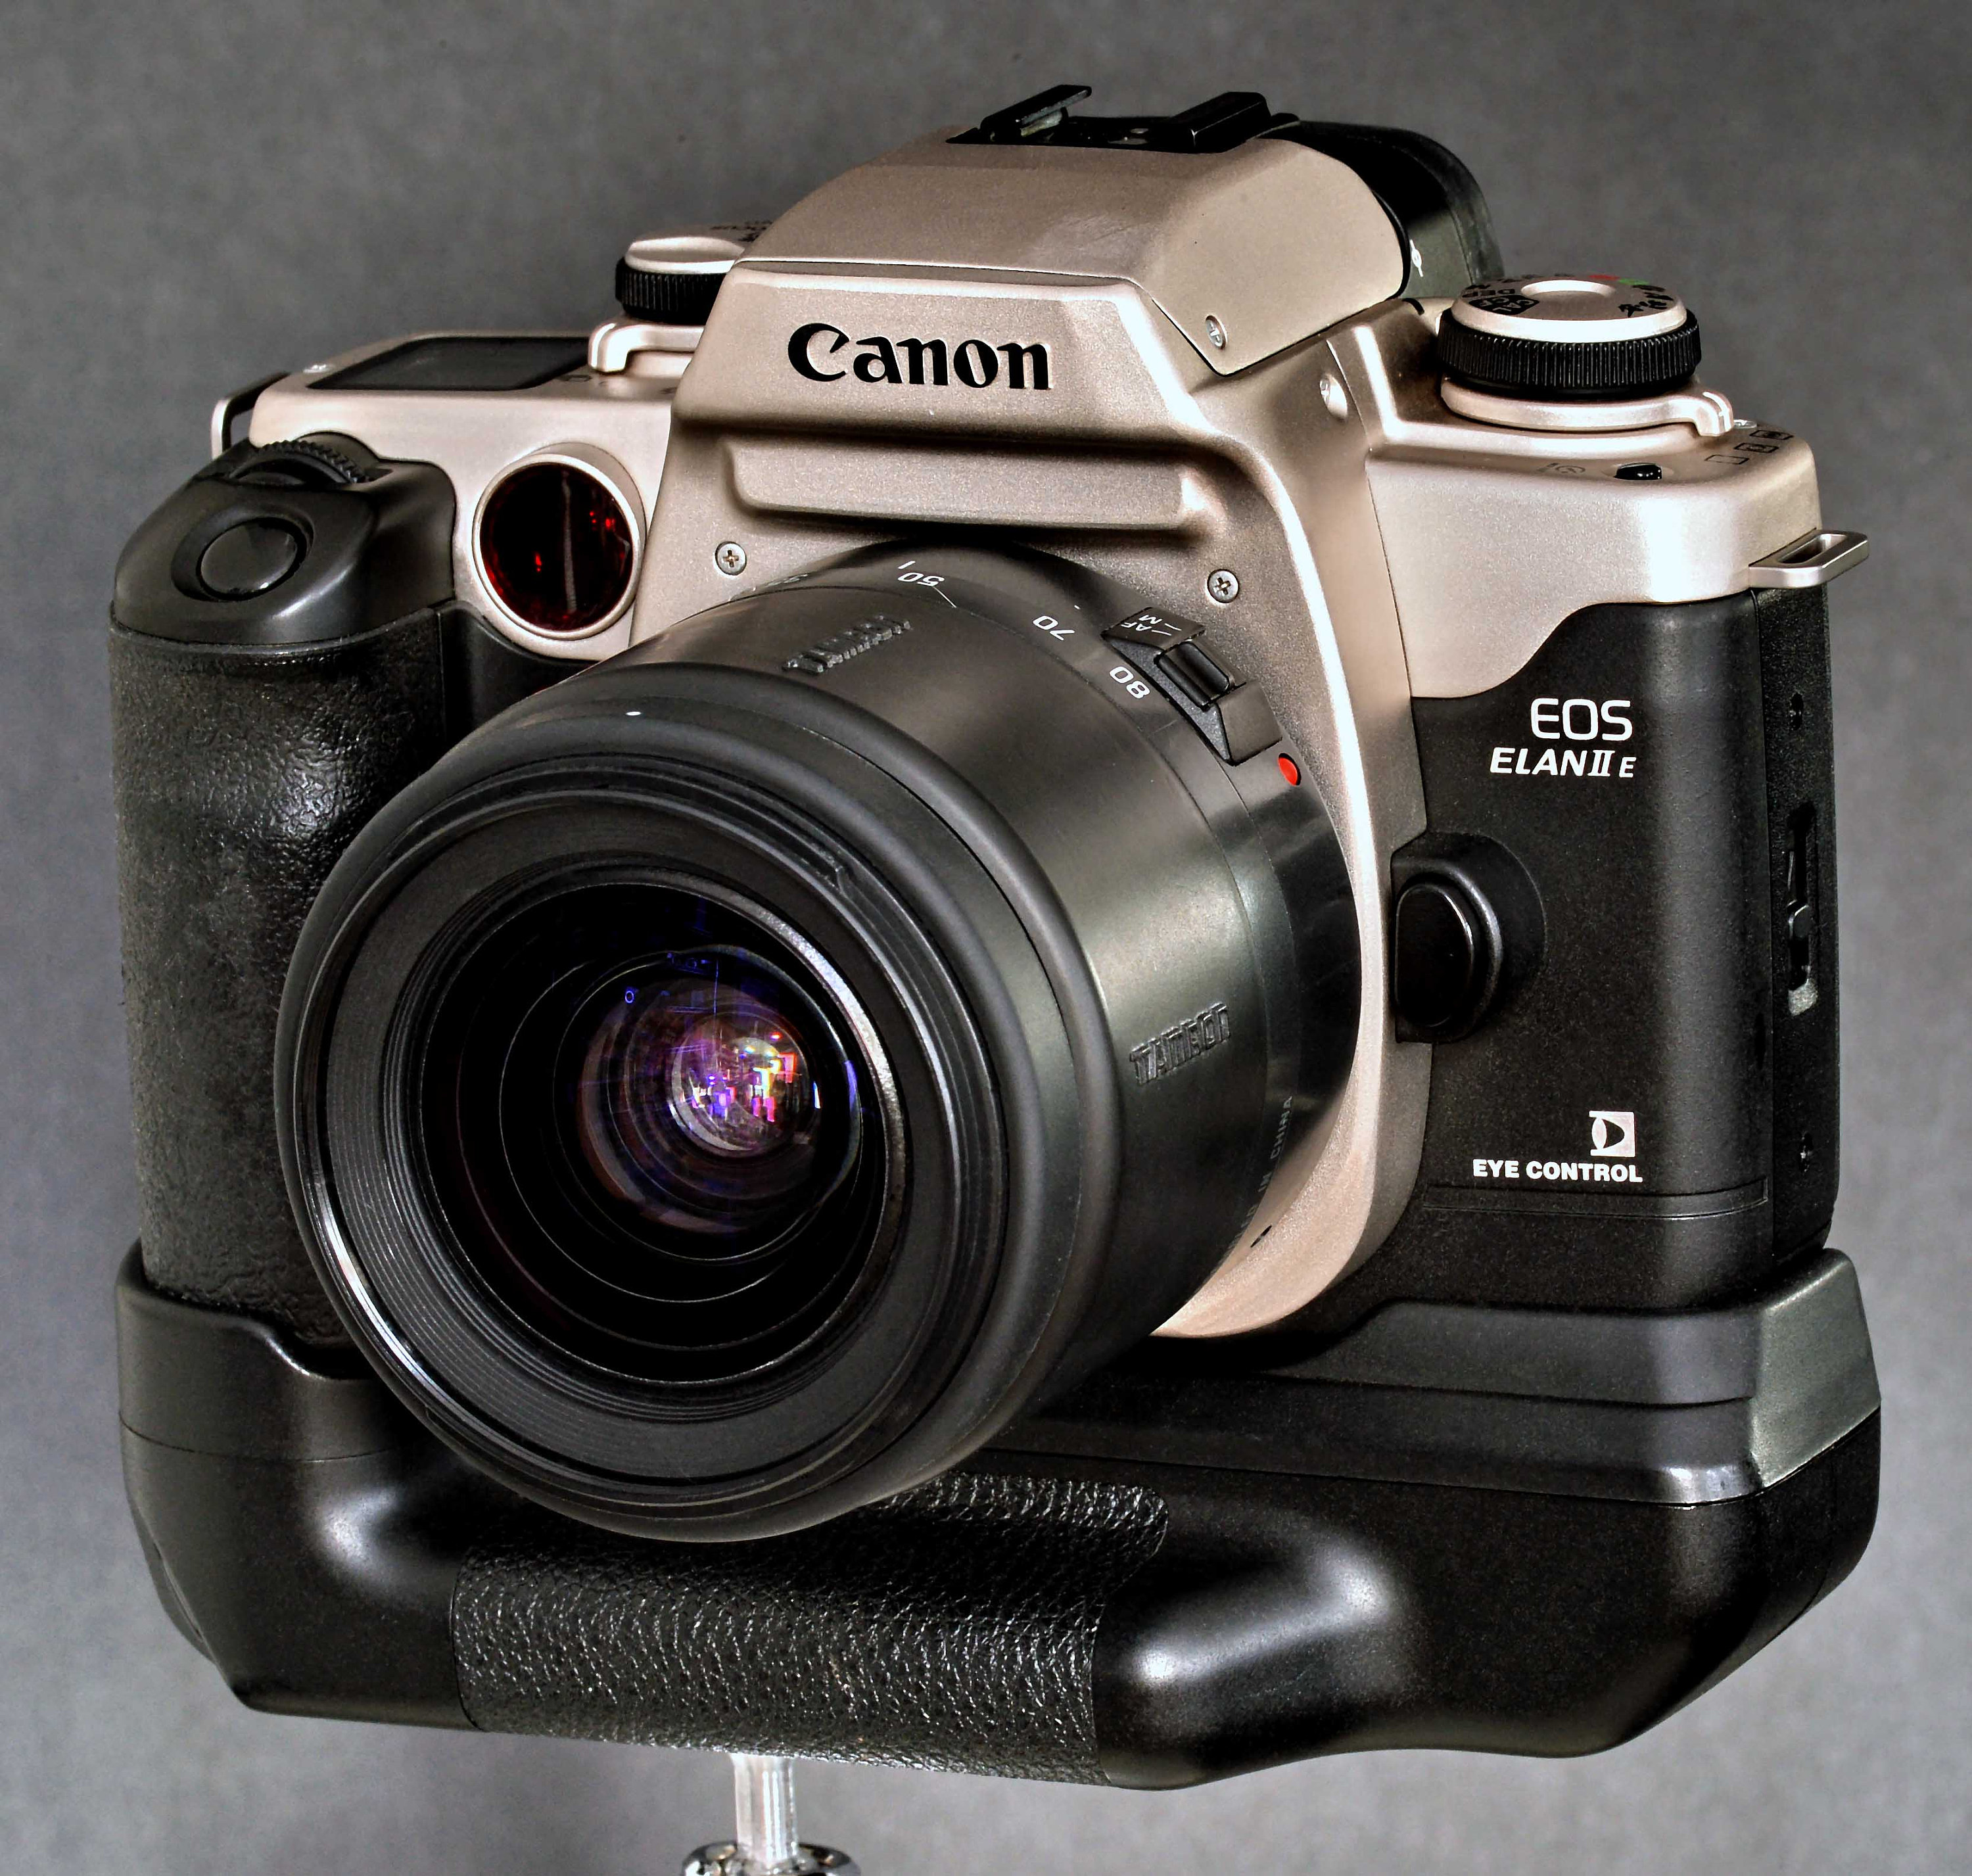 Savant Geheim voering STuDENTS: Canon EoS Elan II E Eye-Control with Canon BP-50 | Etsy